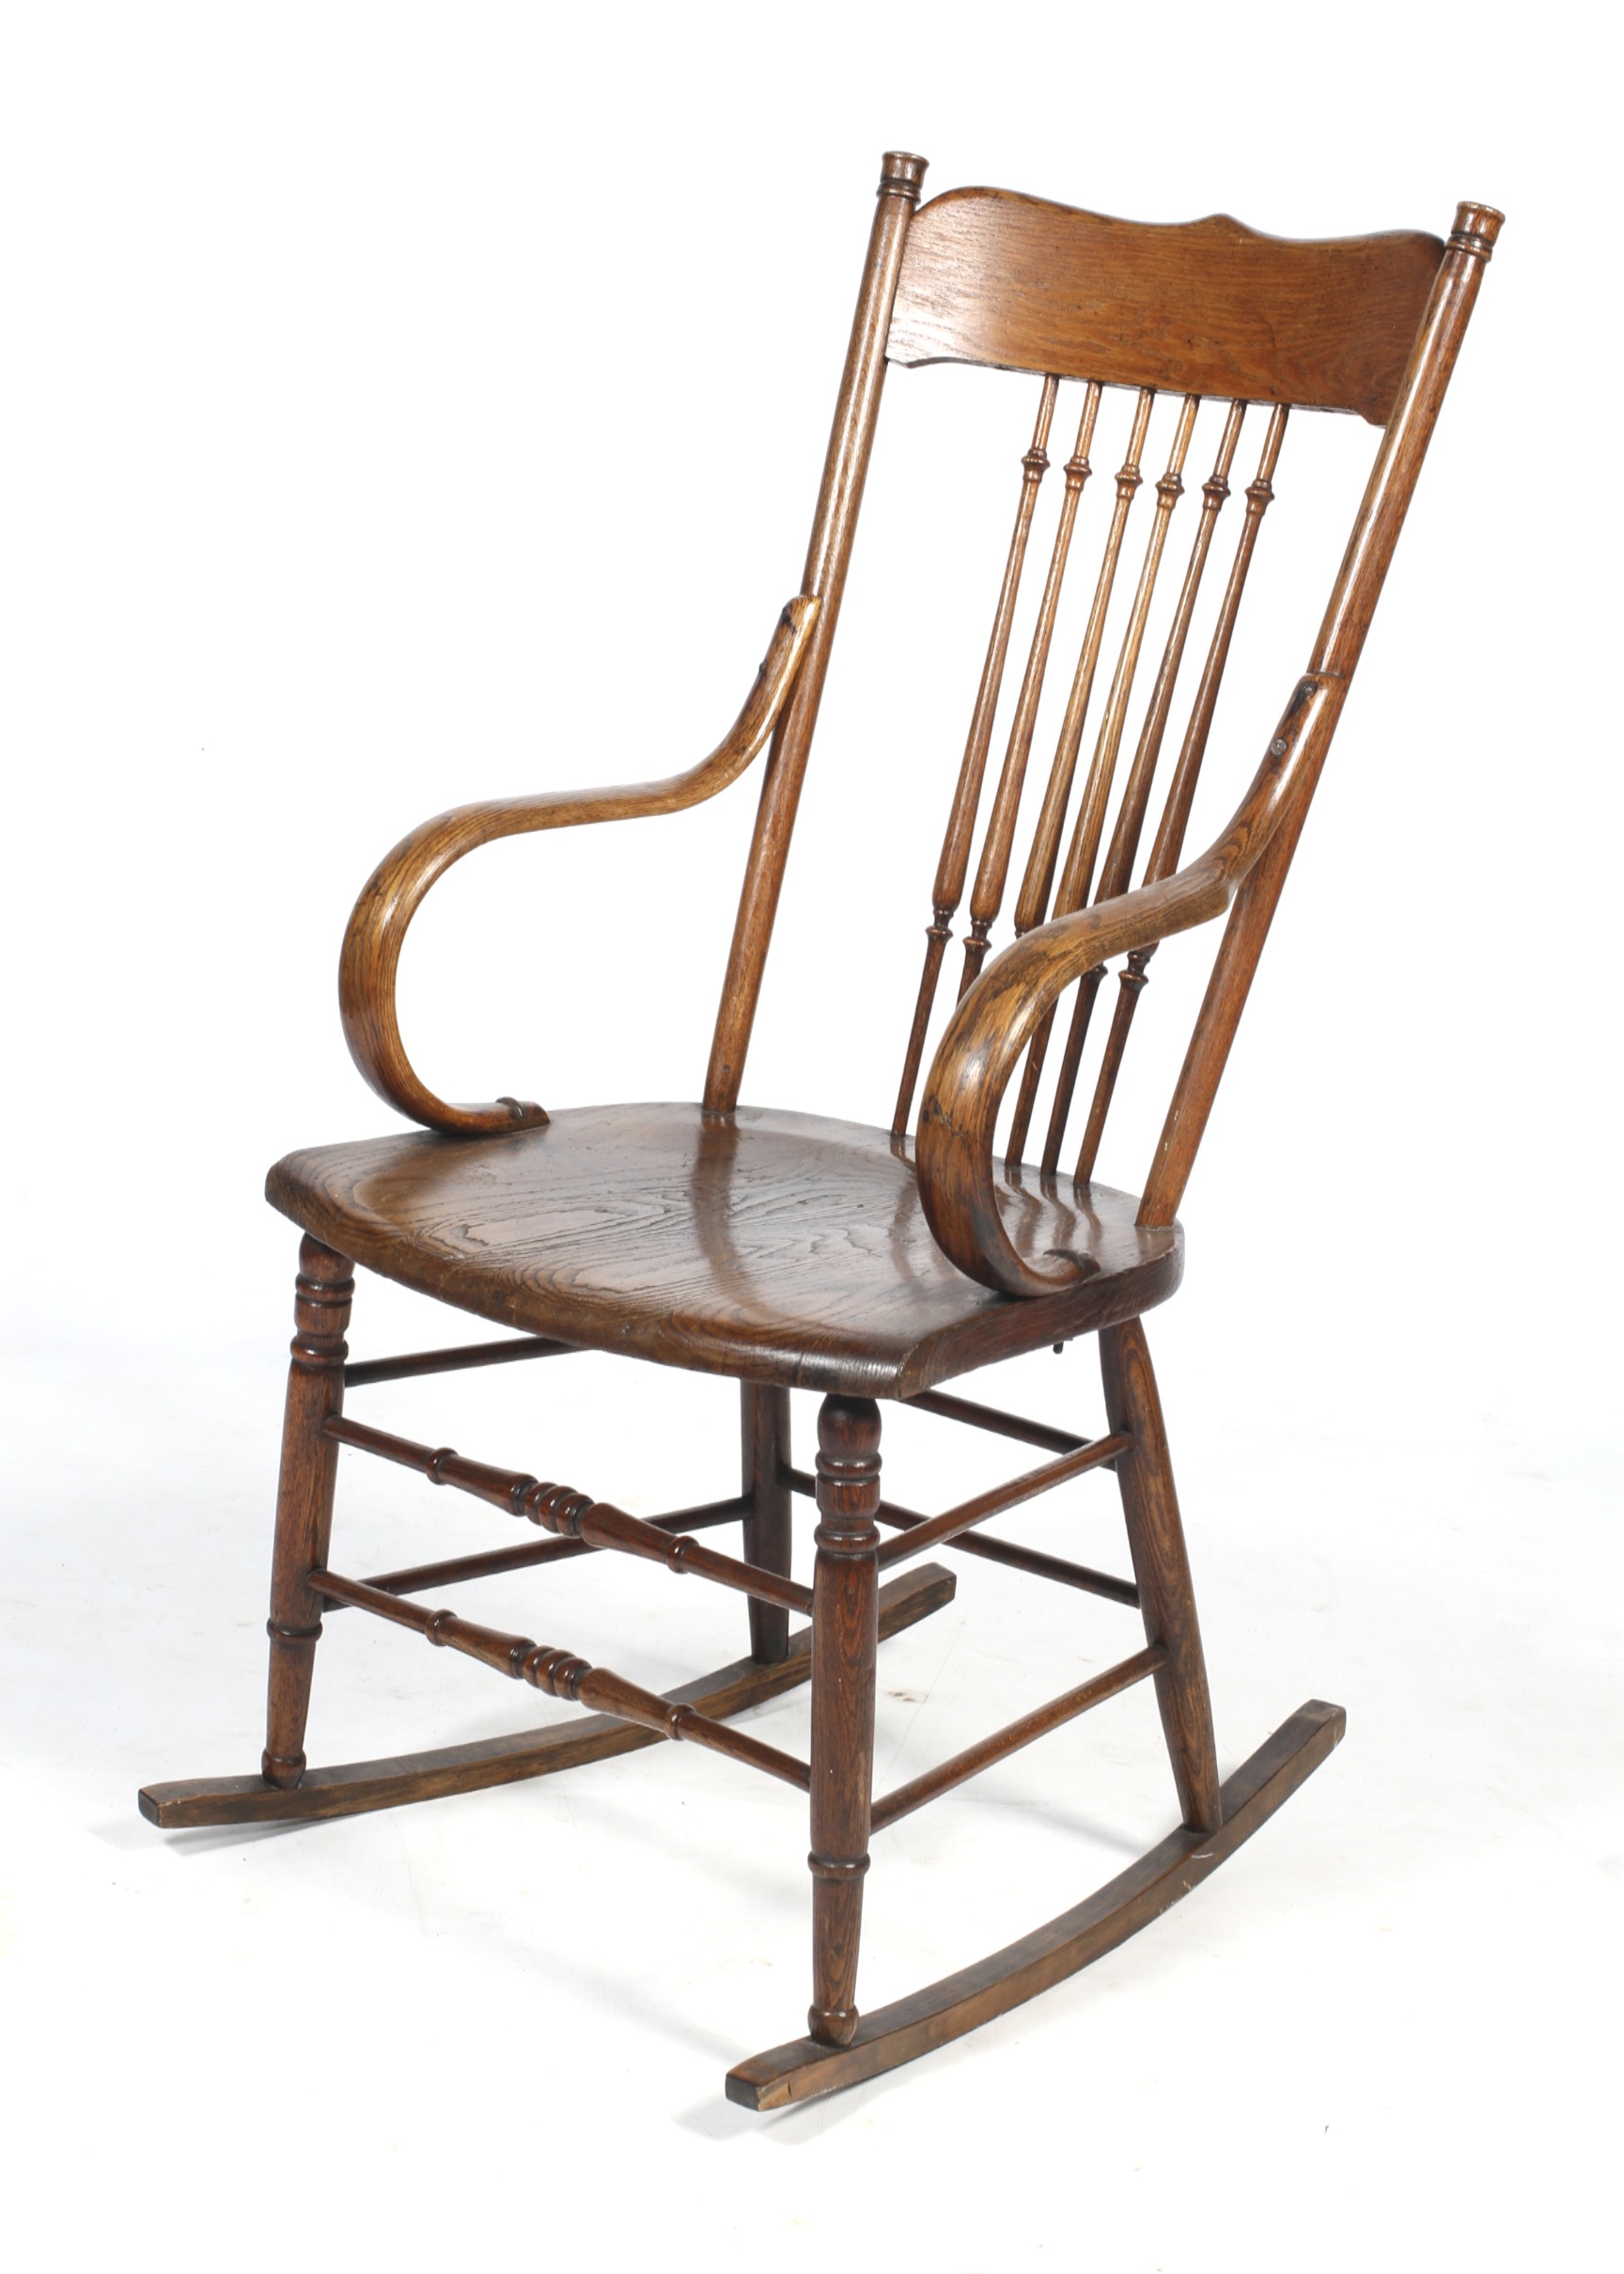 A circa 1900 American oak rocking chair.